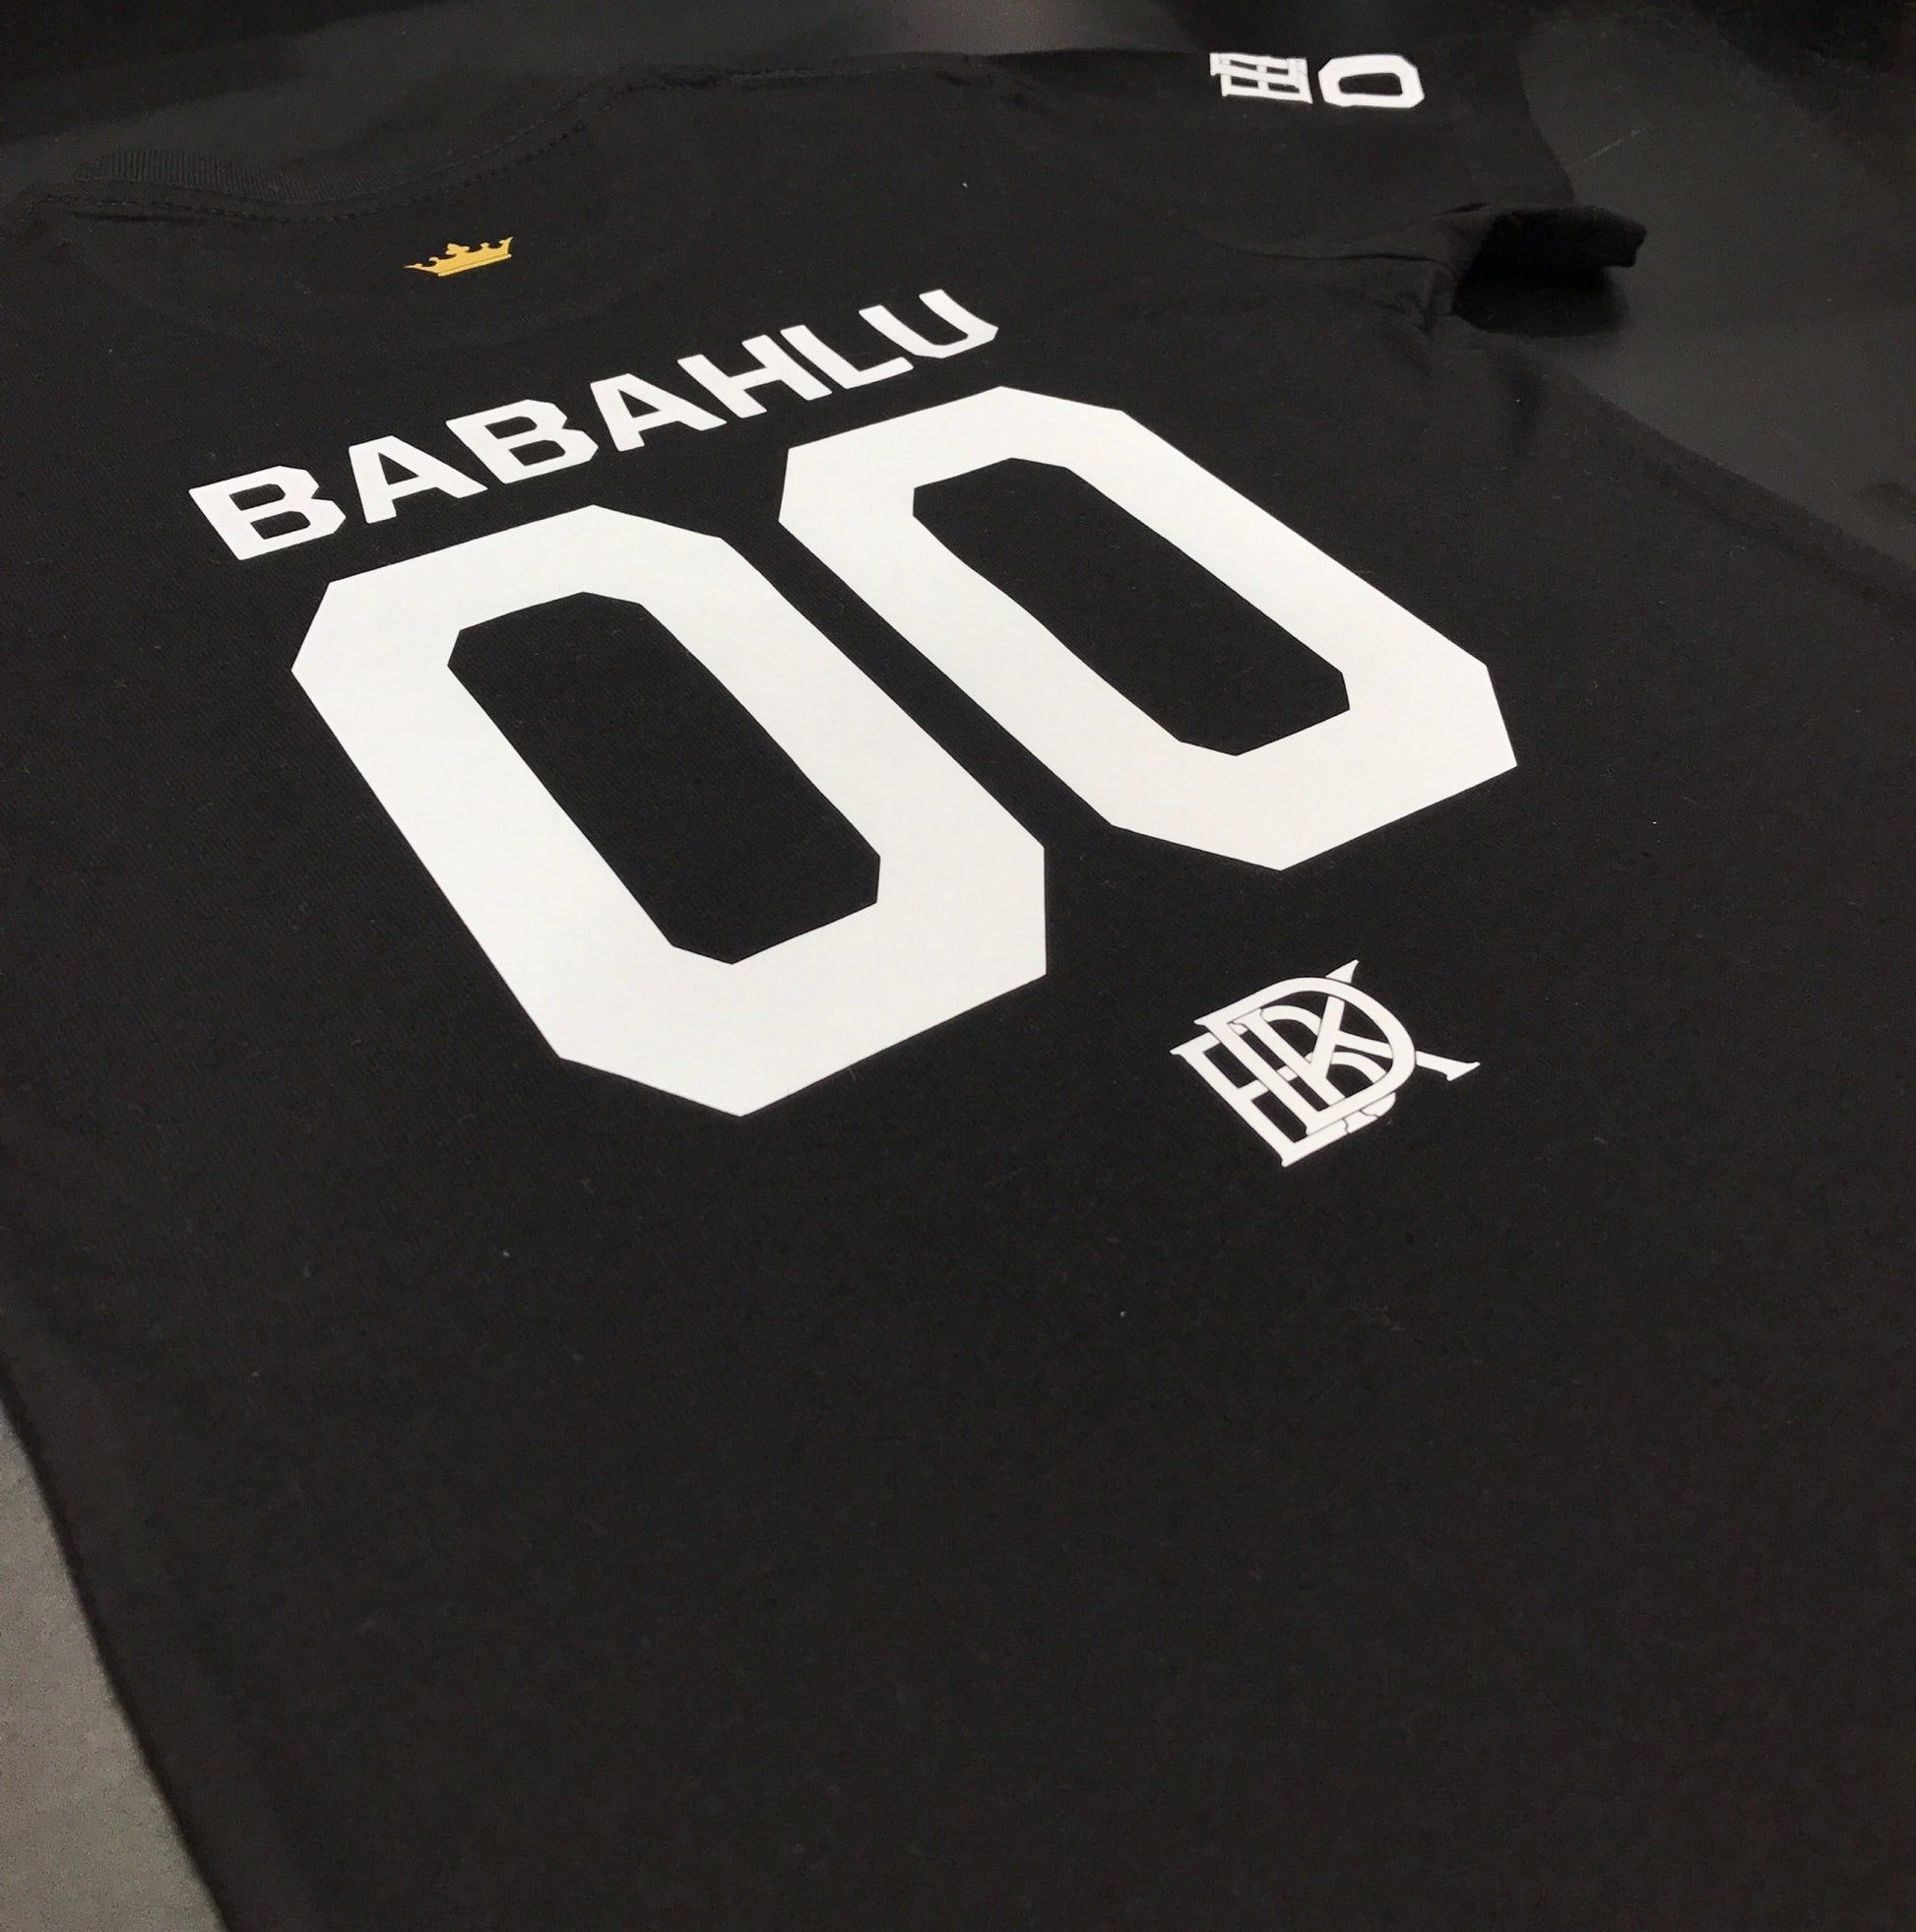 "00 BABAHLU" Street T Shirt - Babahlu Kids